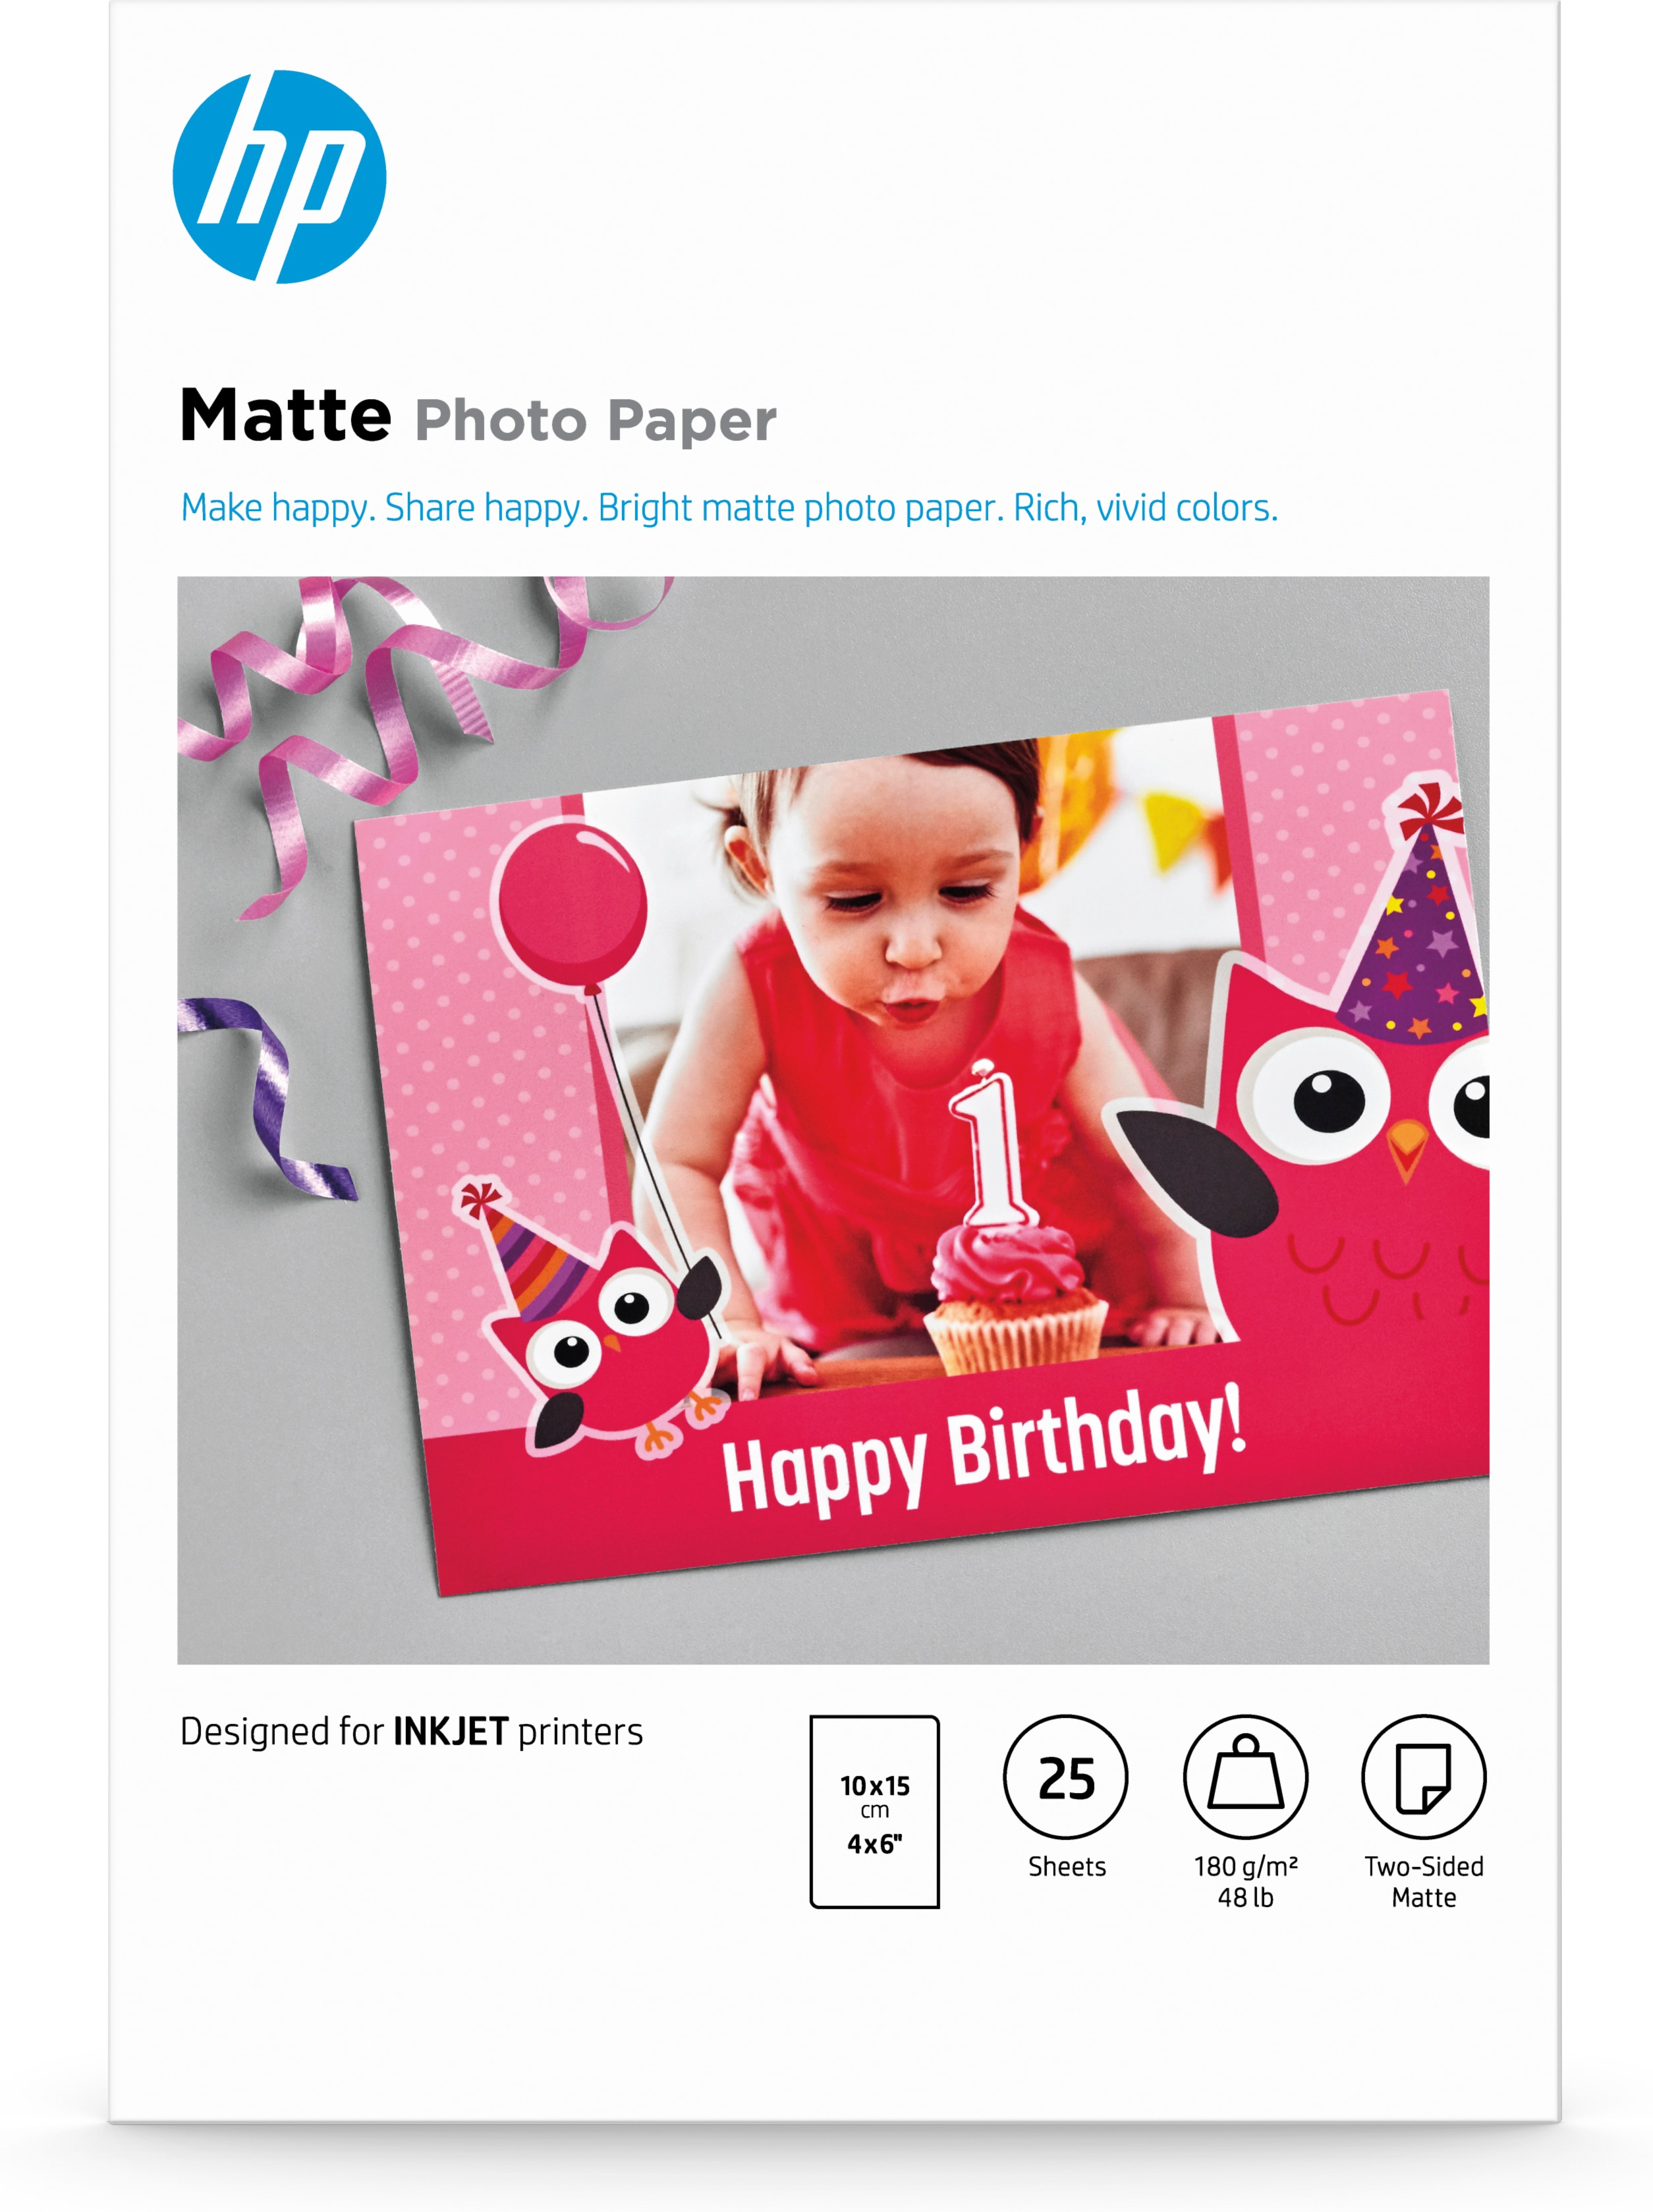 Matte Fsc Photo Paper 4x6 25 Sheet 7hf70a - WC01